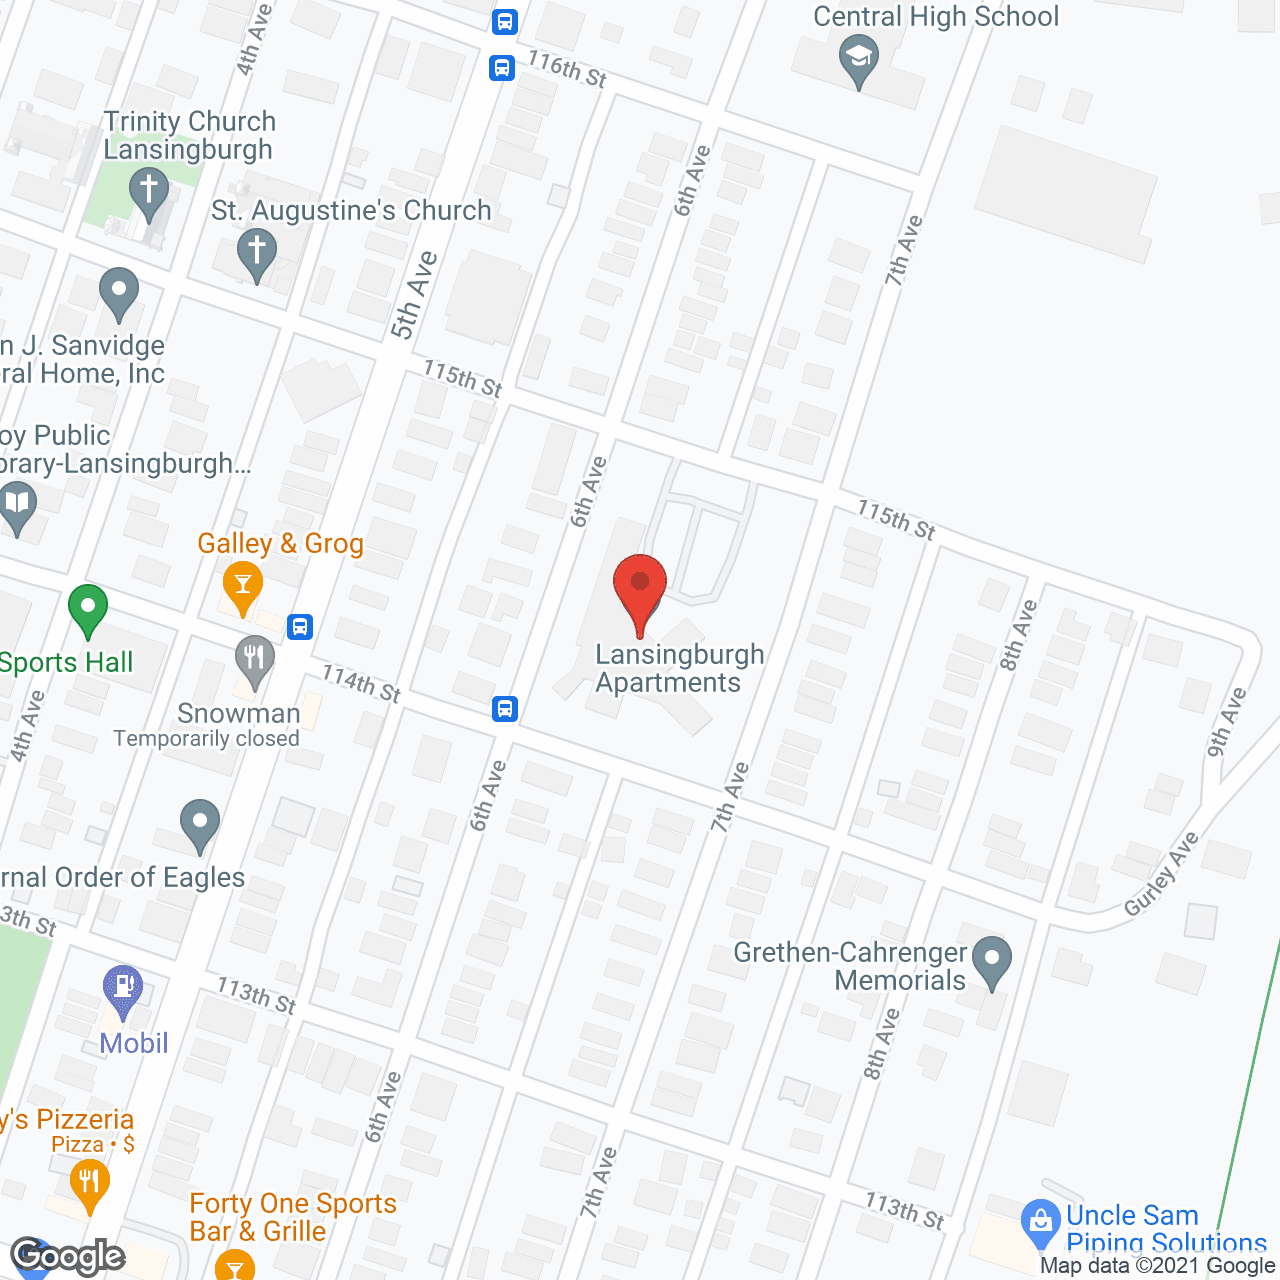 Lansingburgh Apartments in google map